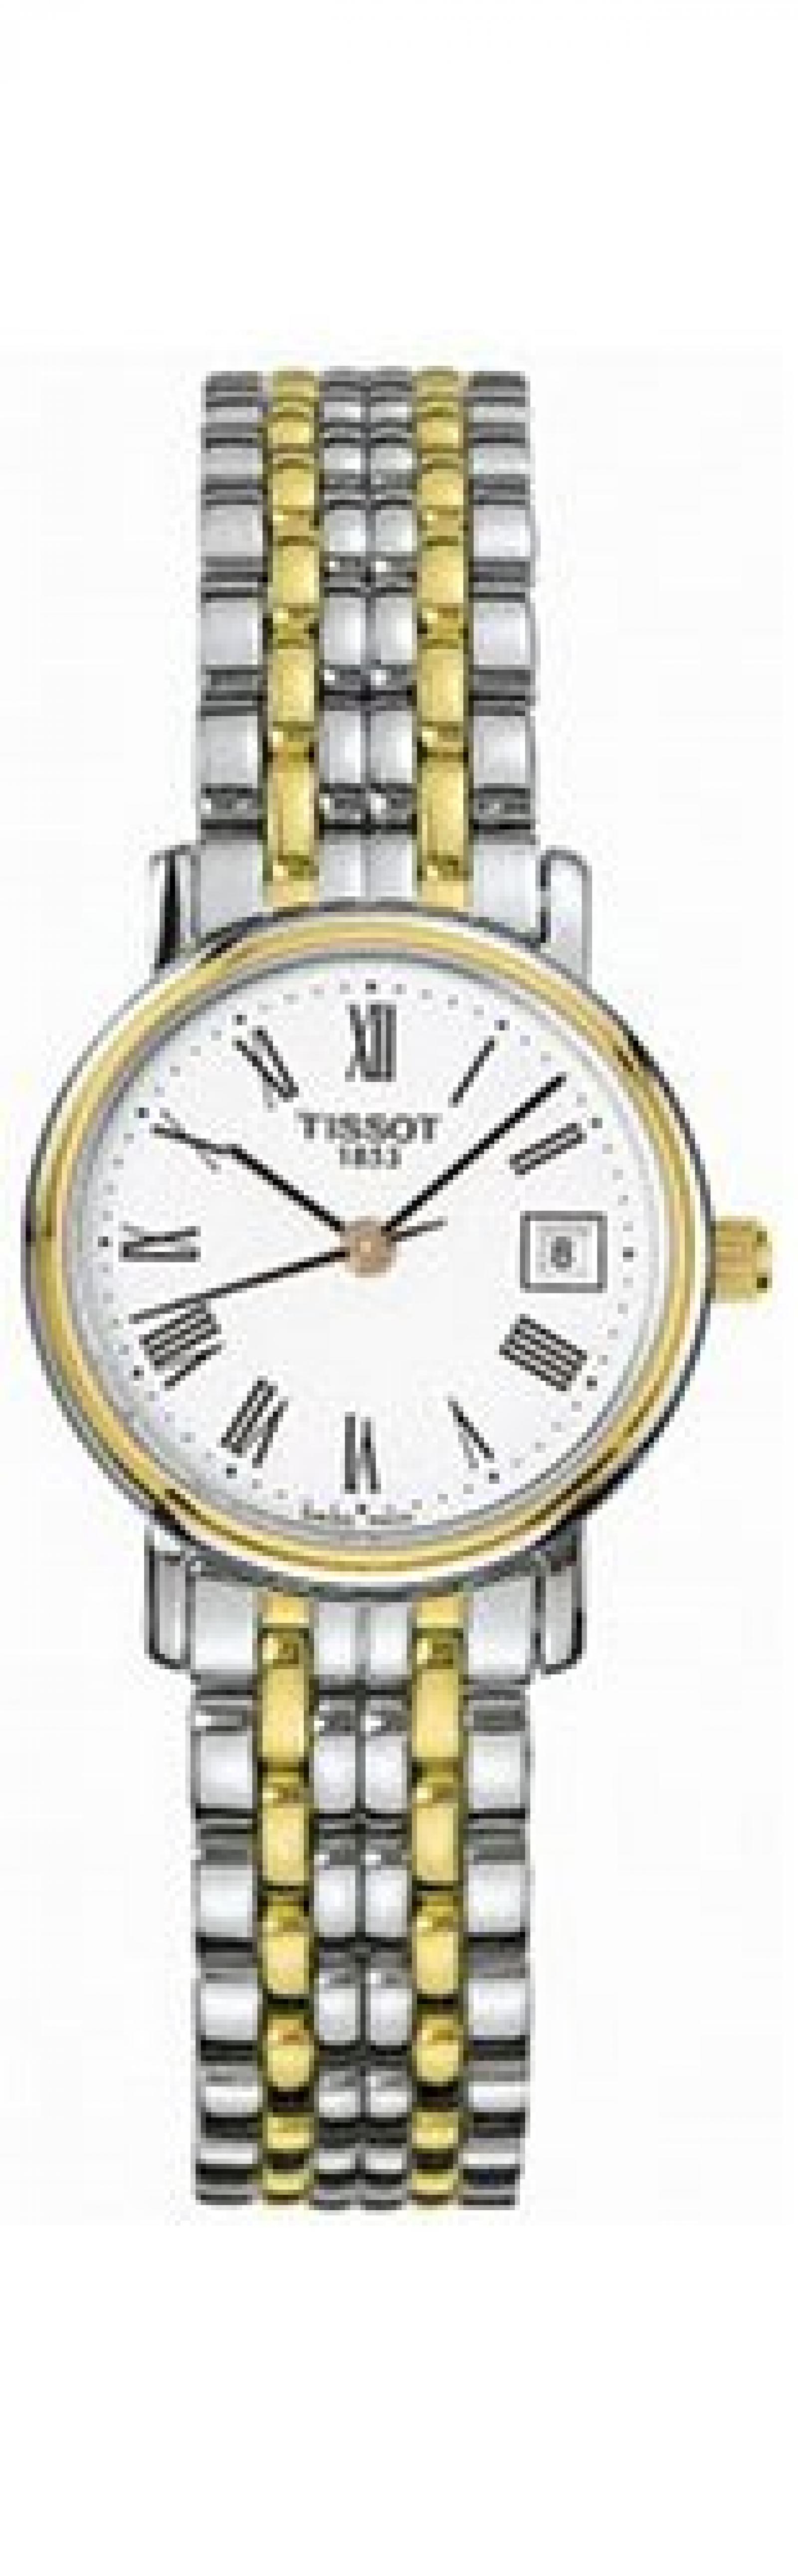 Tissot T-Classic Desire T52.2.281.13 